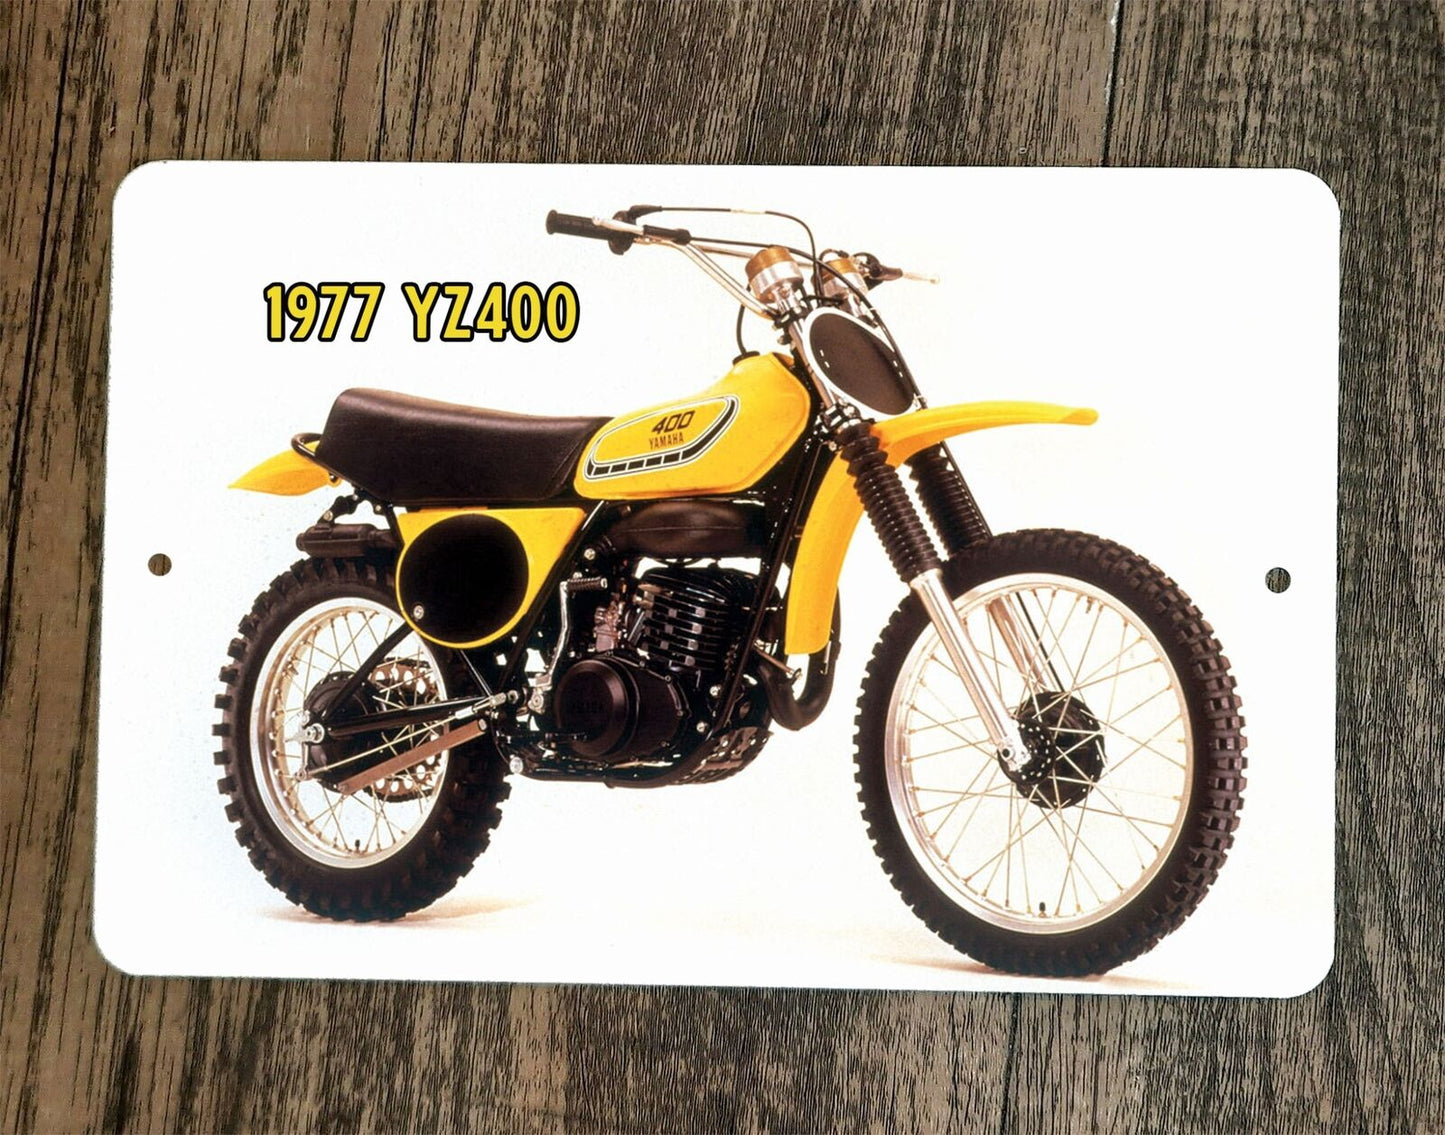 1977 Yamaha YZ400 Motorcross Dirt Bike Motorcycle Pic 8x12 Metal Wall Sign